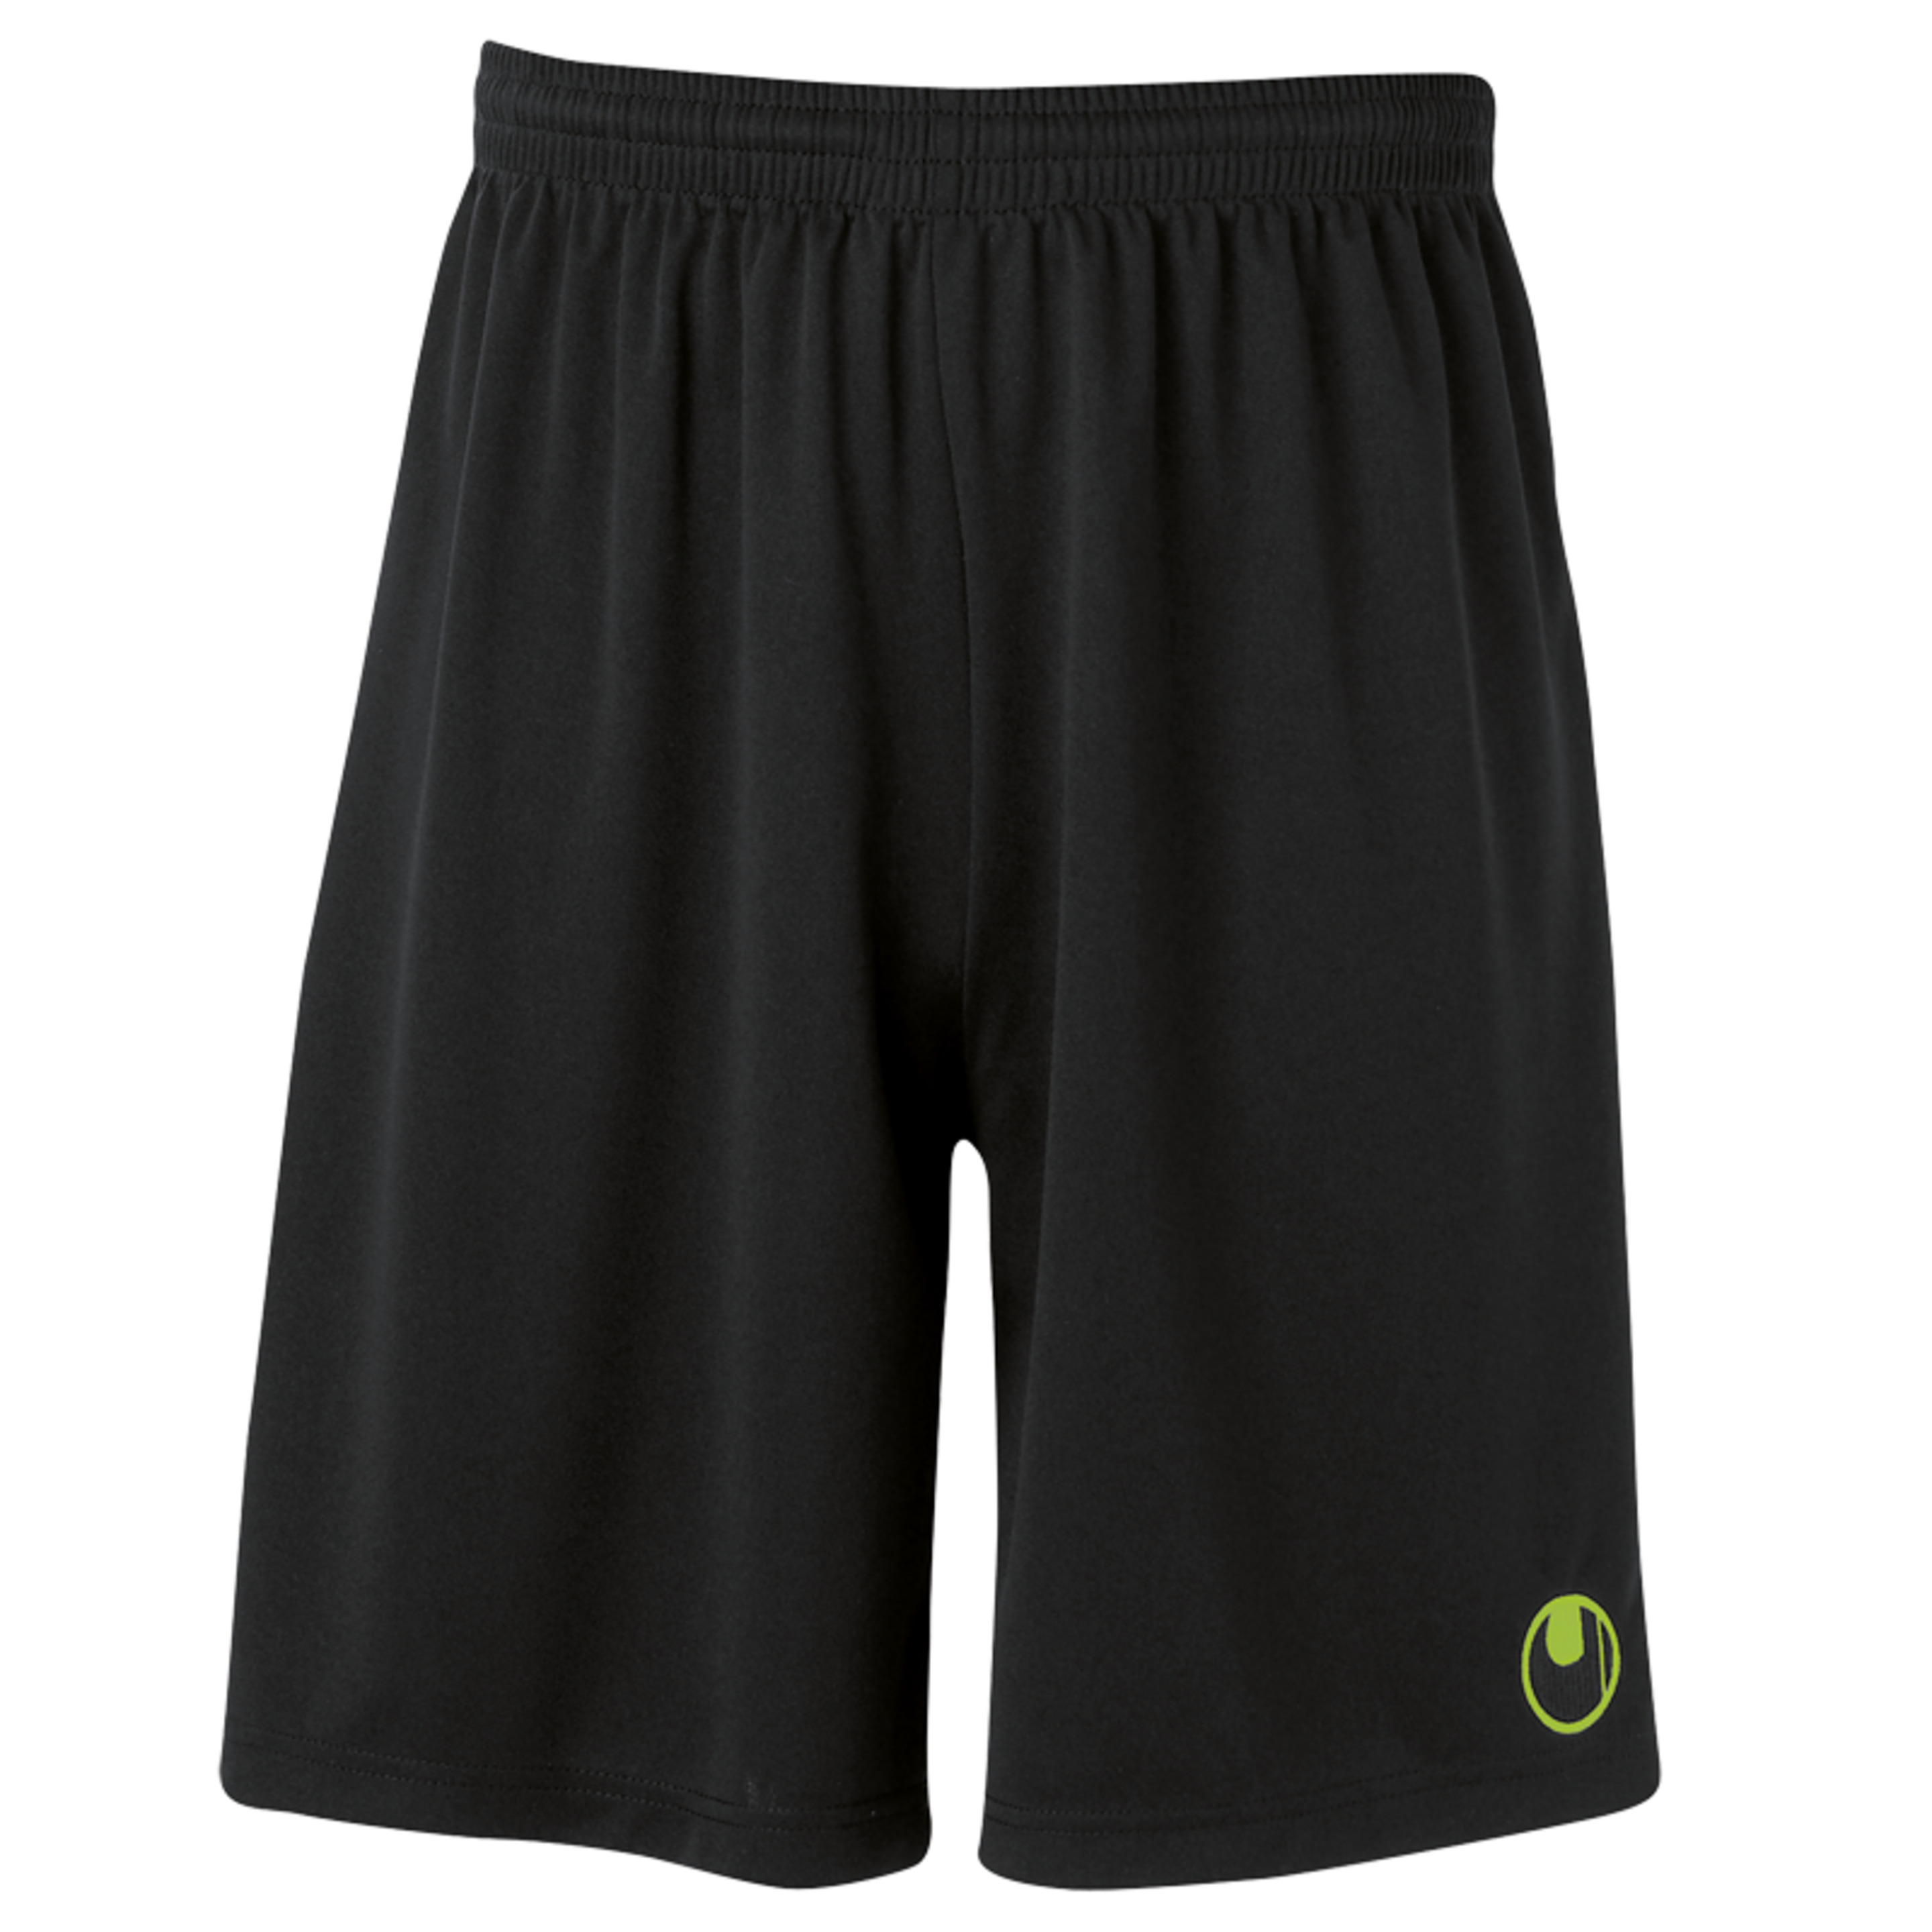 Center Ii Shorts With Slip Inside Negro/verde Flash Uhlsport